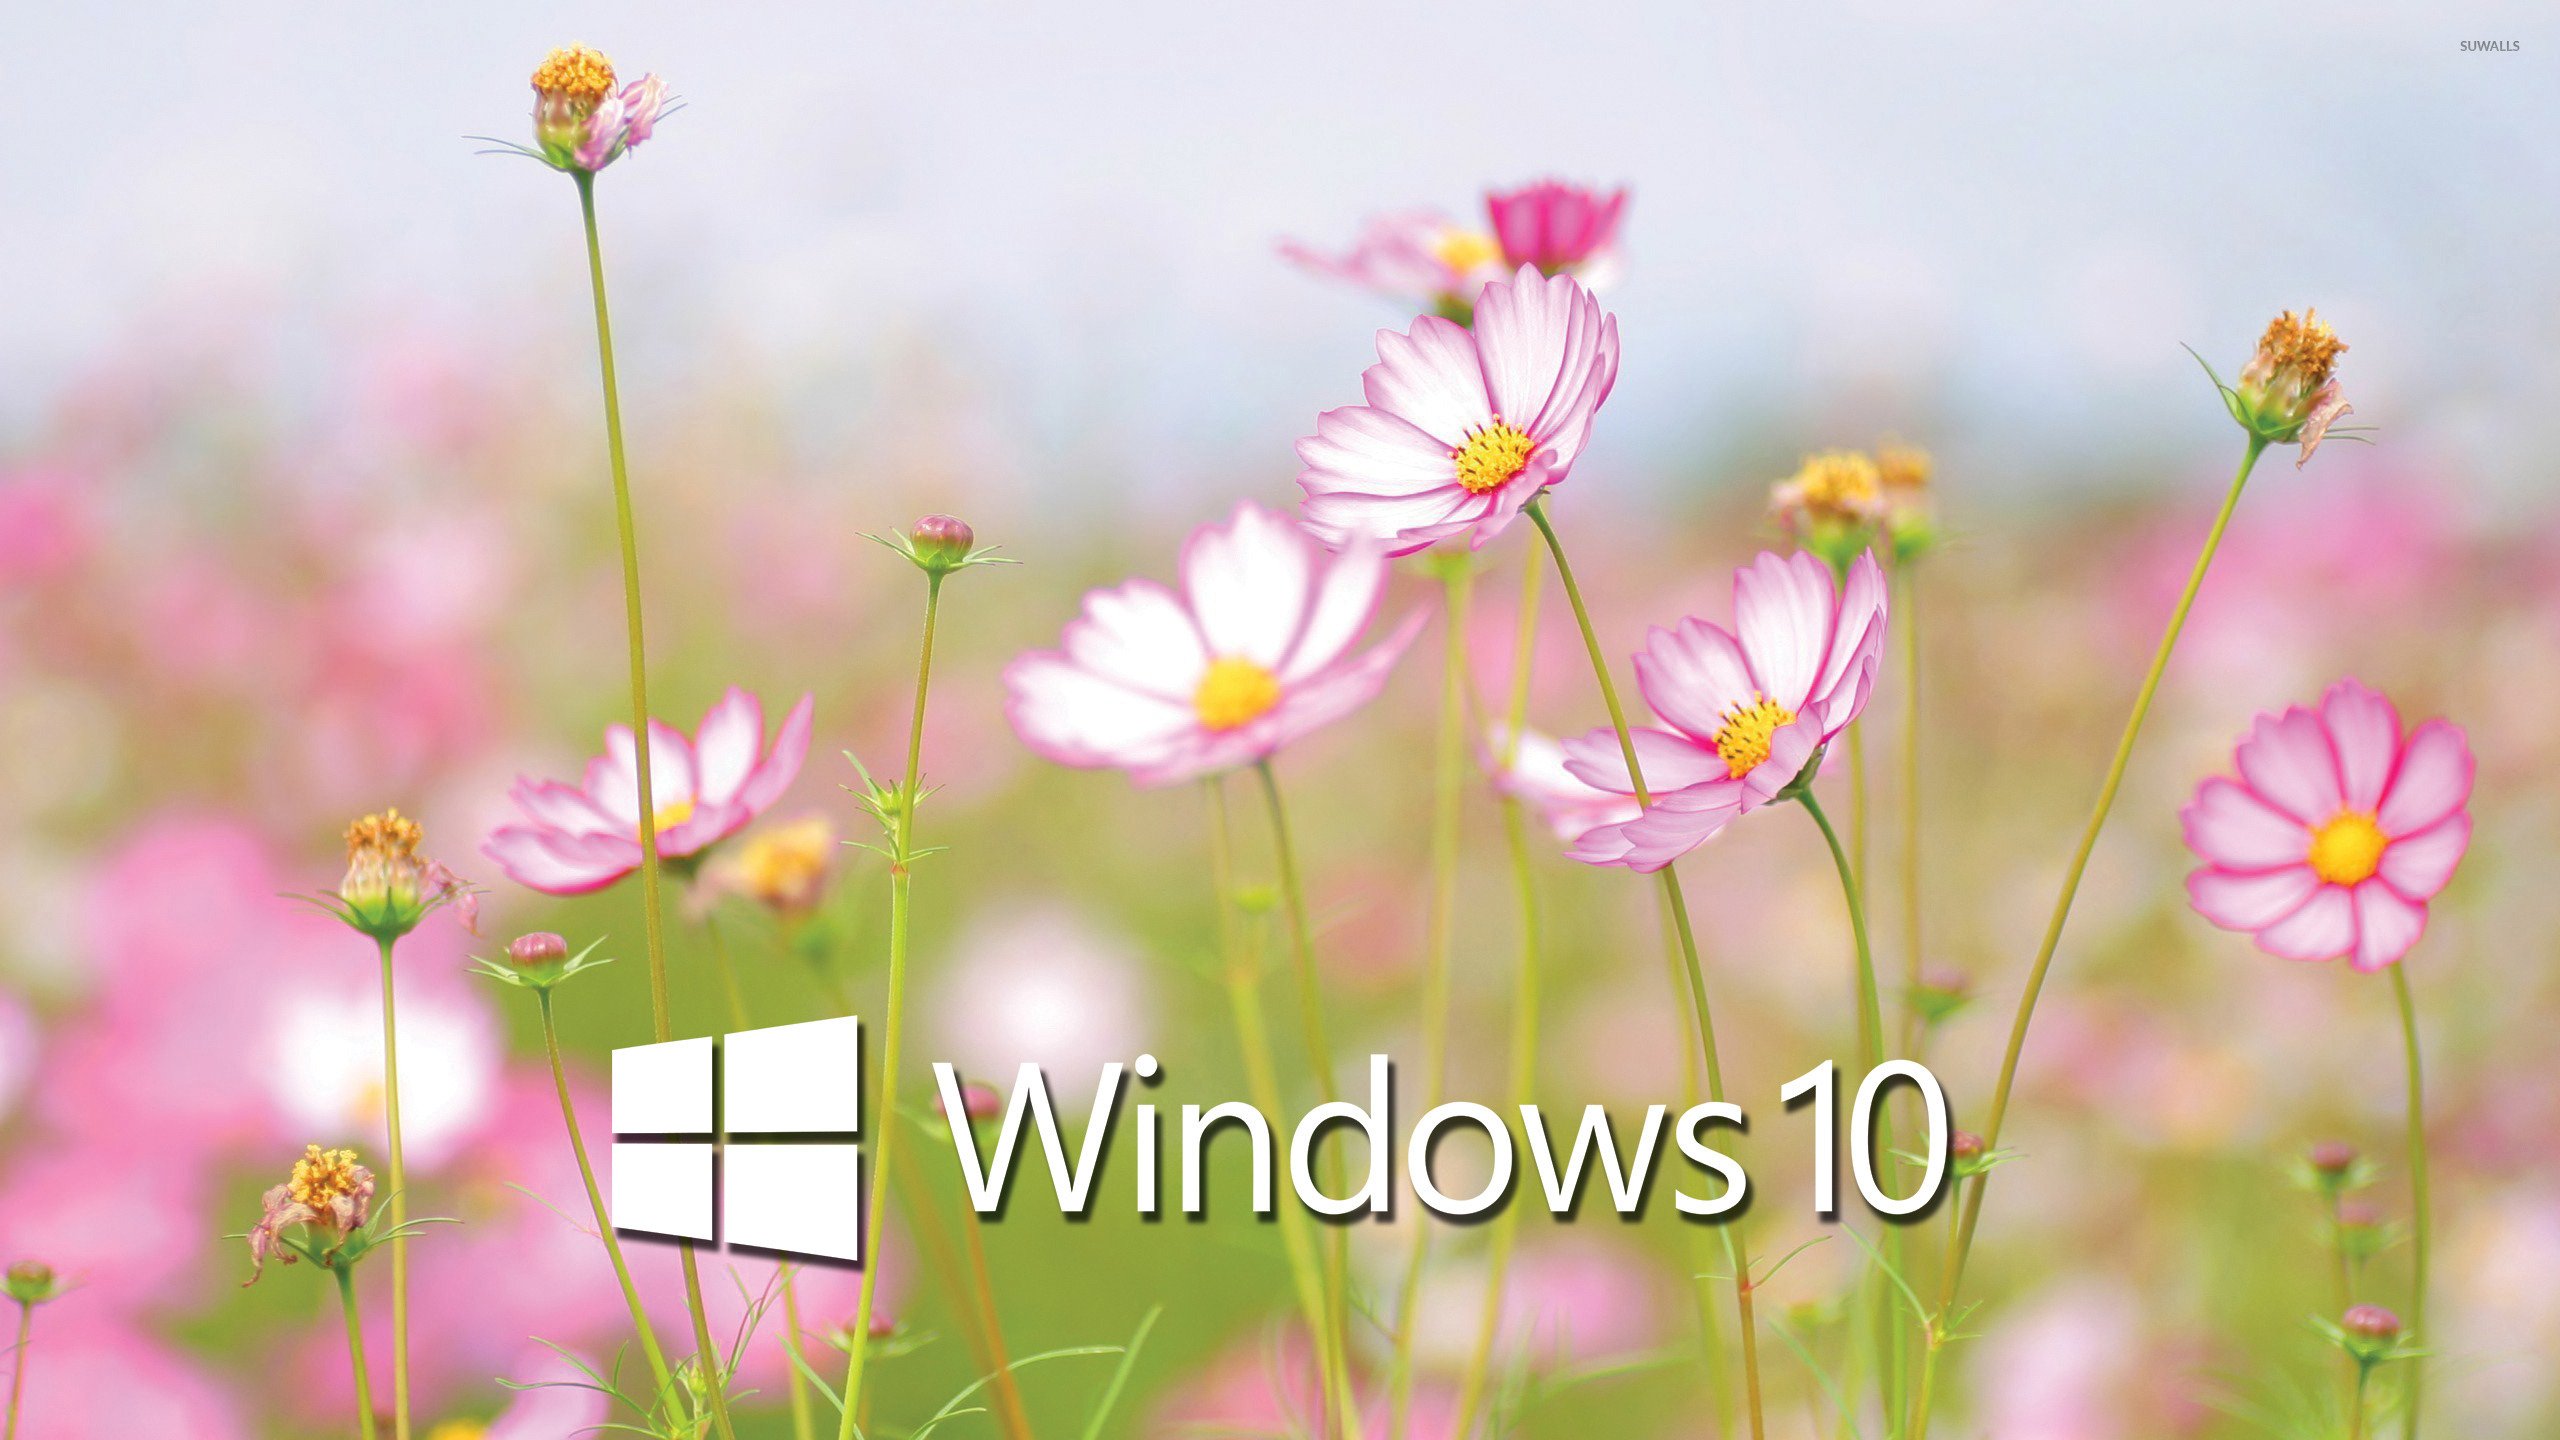 Windows 10 wallpaper 2560x1440